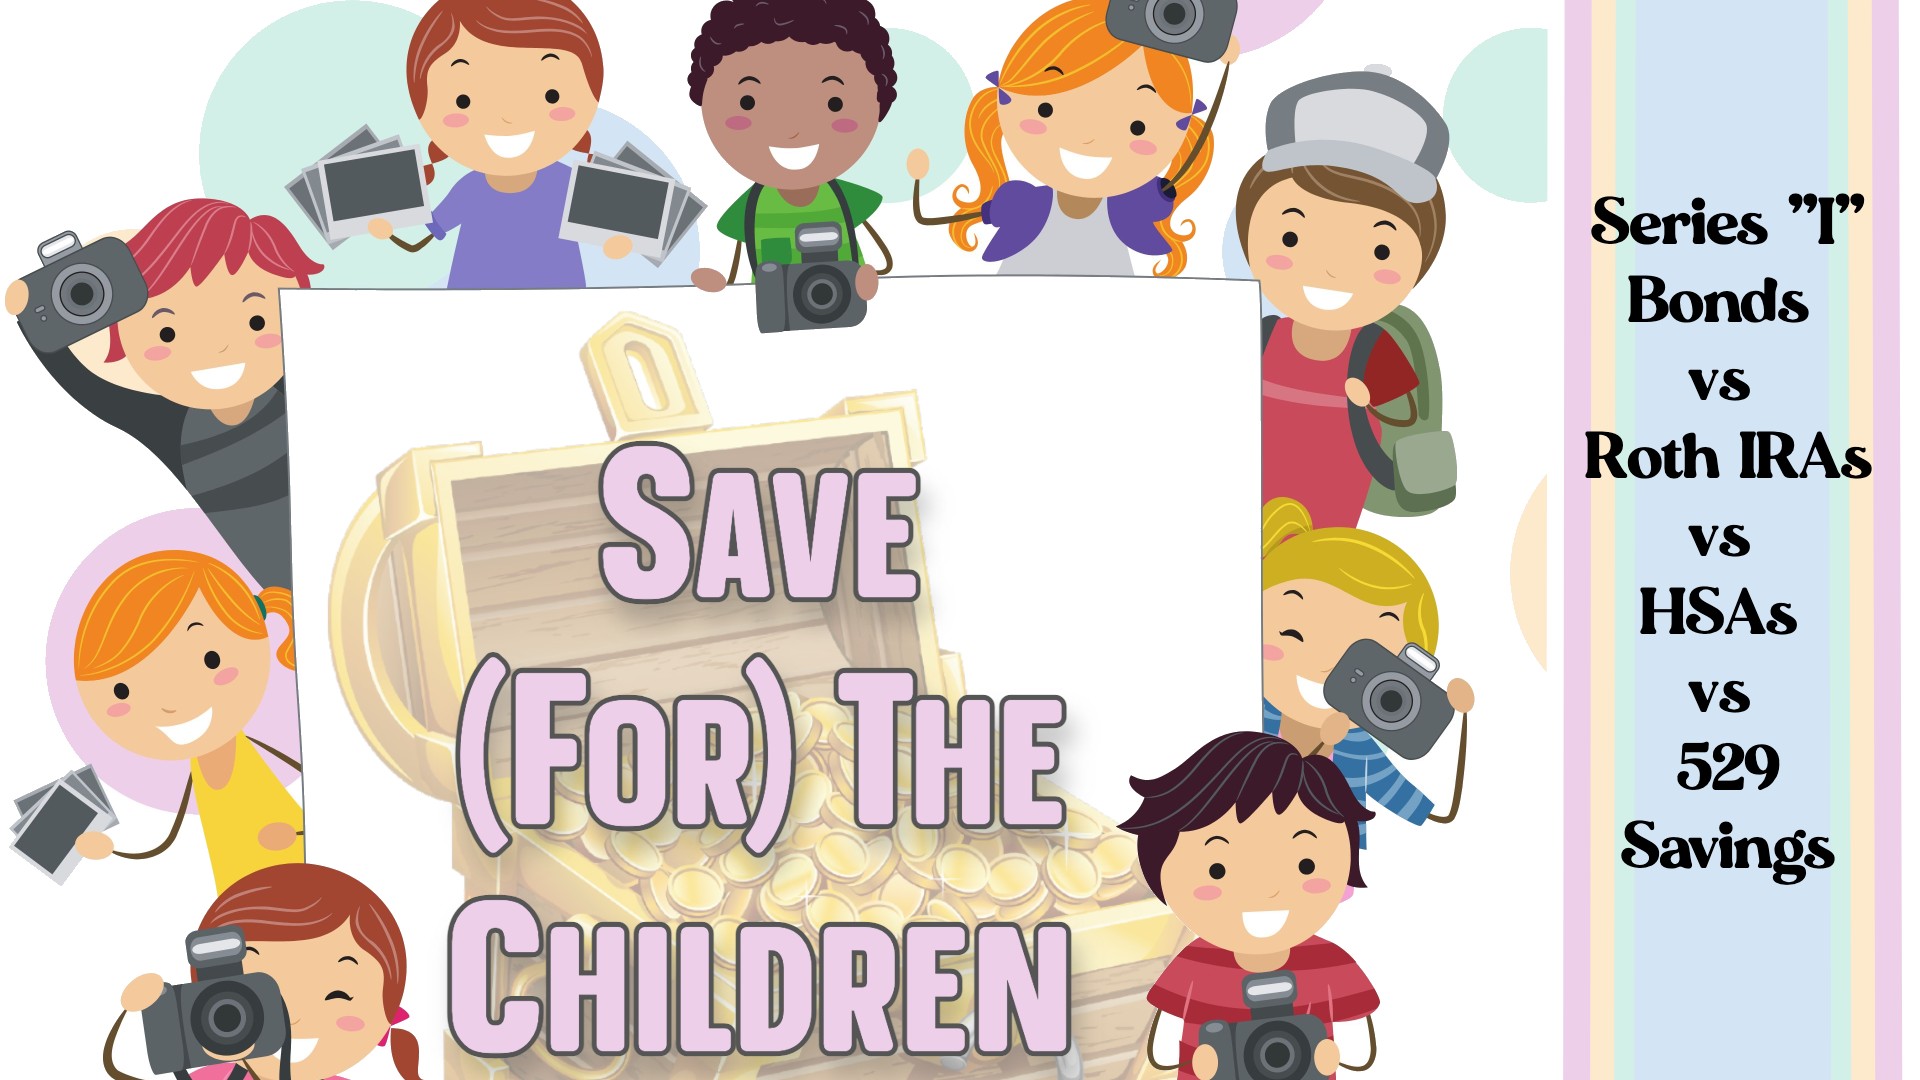 Save (for) the Children: Series “I” Bonds vs Roth IRAs vs HSAs vs 529 Savings